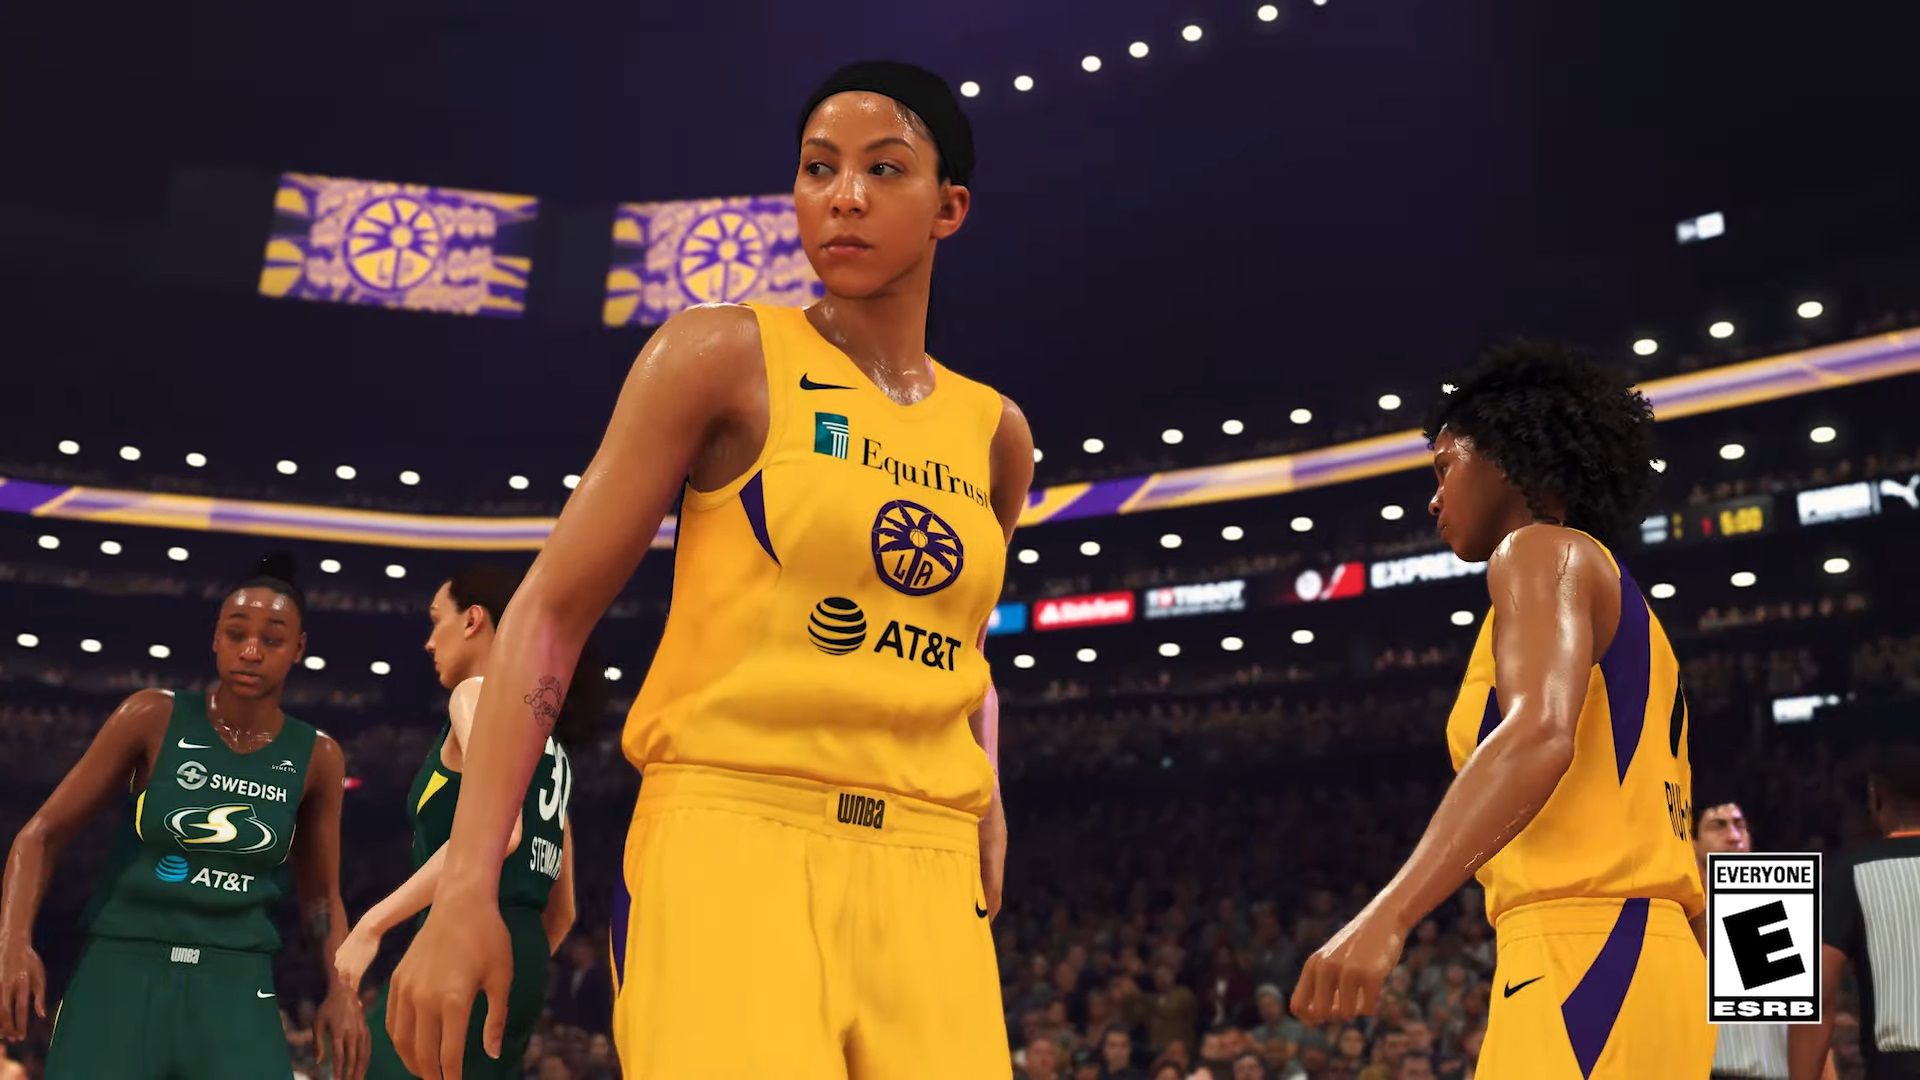 NBA 2K20 trailer showcases WNBA gameplay and game capture